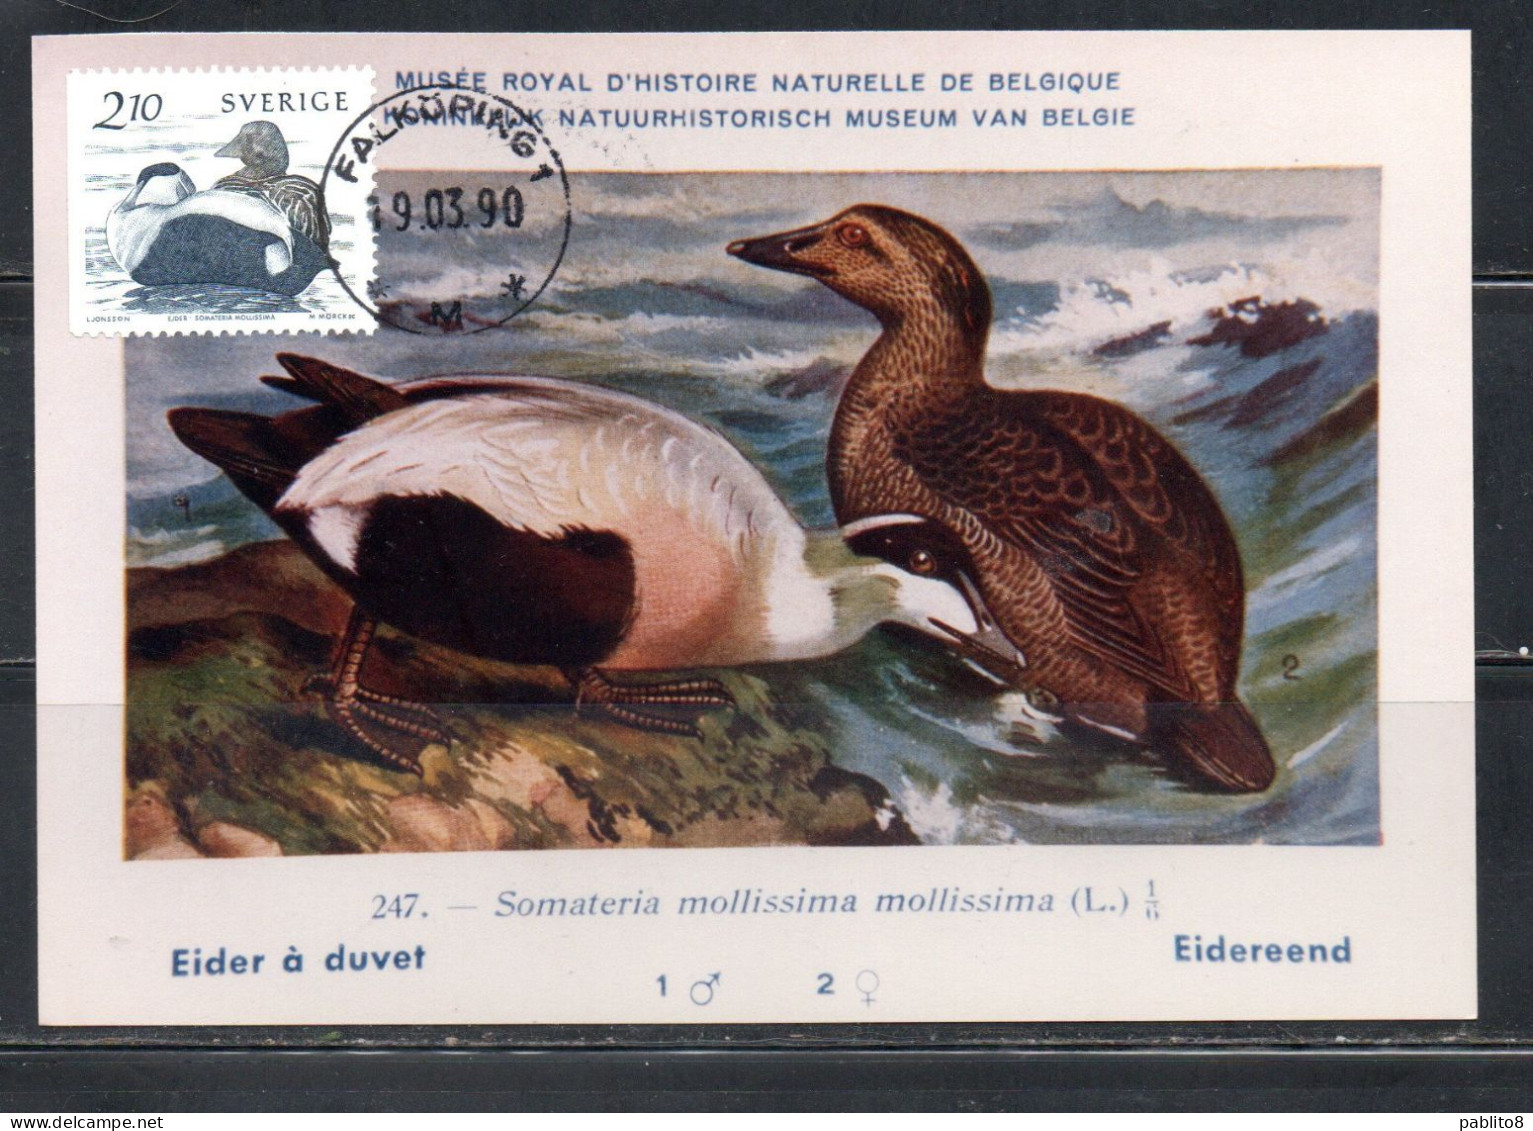 SWEDEN SVERIGE SVEZIA SUEDE 1986 NATURAL MUSEUM BIRD FAUNA WATERBIRDS EIDER 2.10k MAXI MAXIMUM CARD CARTE - Cartes-maximum (CM)